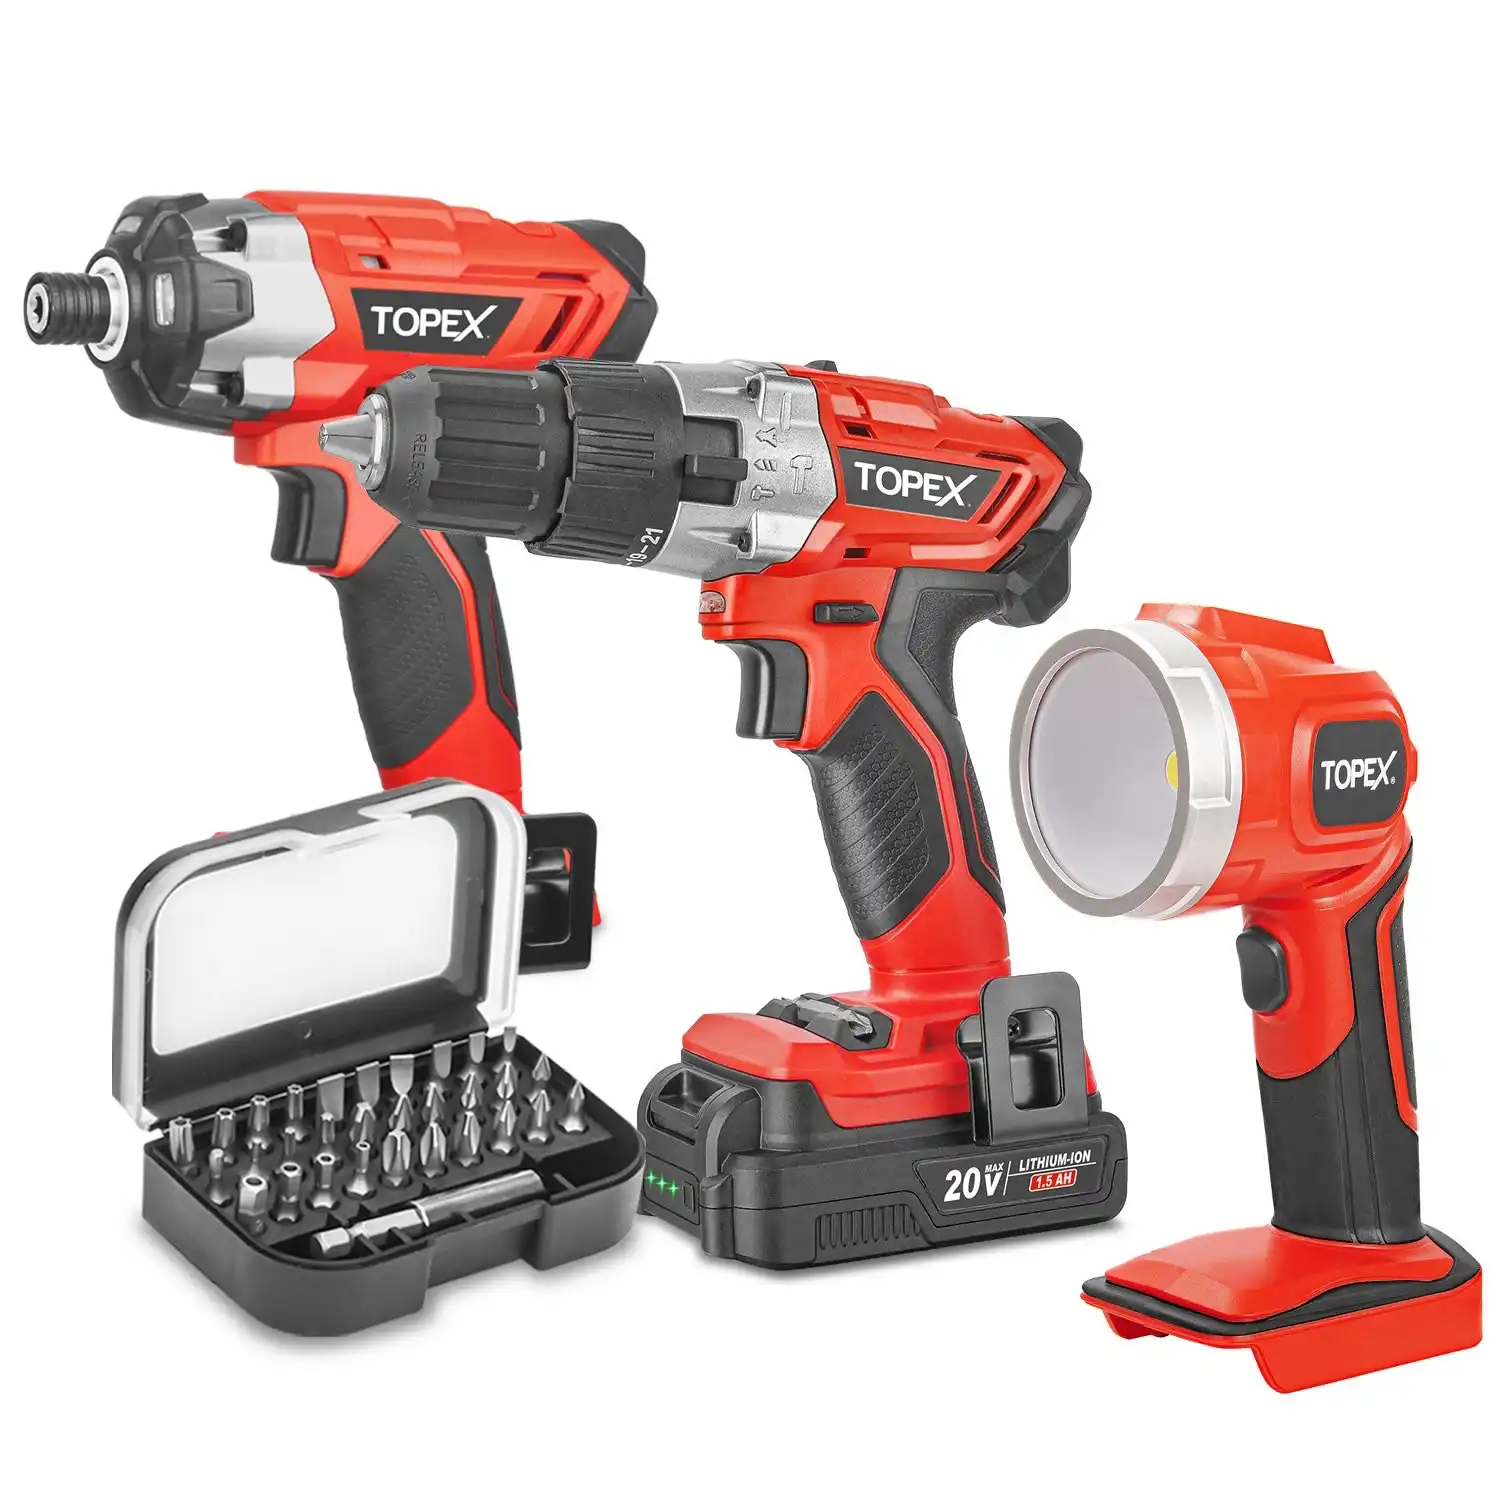 Topex 20 V Cordless Kit: Hammer Drill, Impact Driver, LED Light w/ Screw Bits